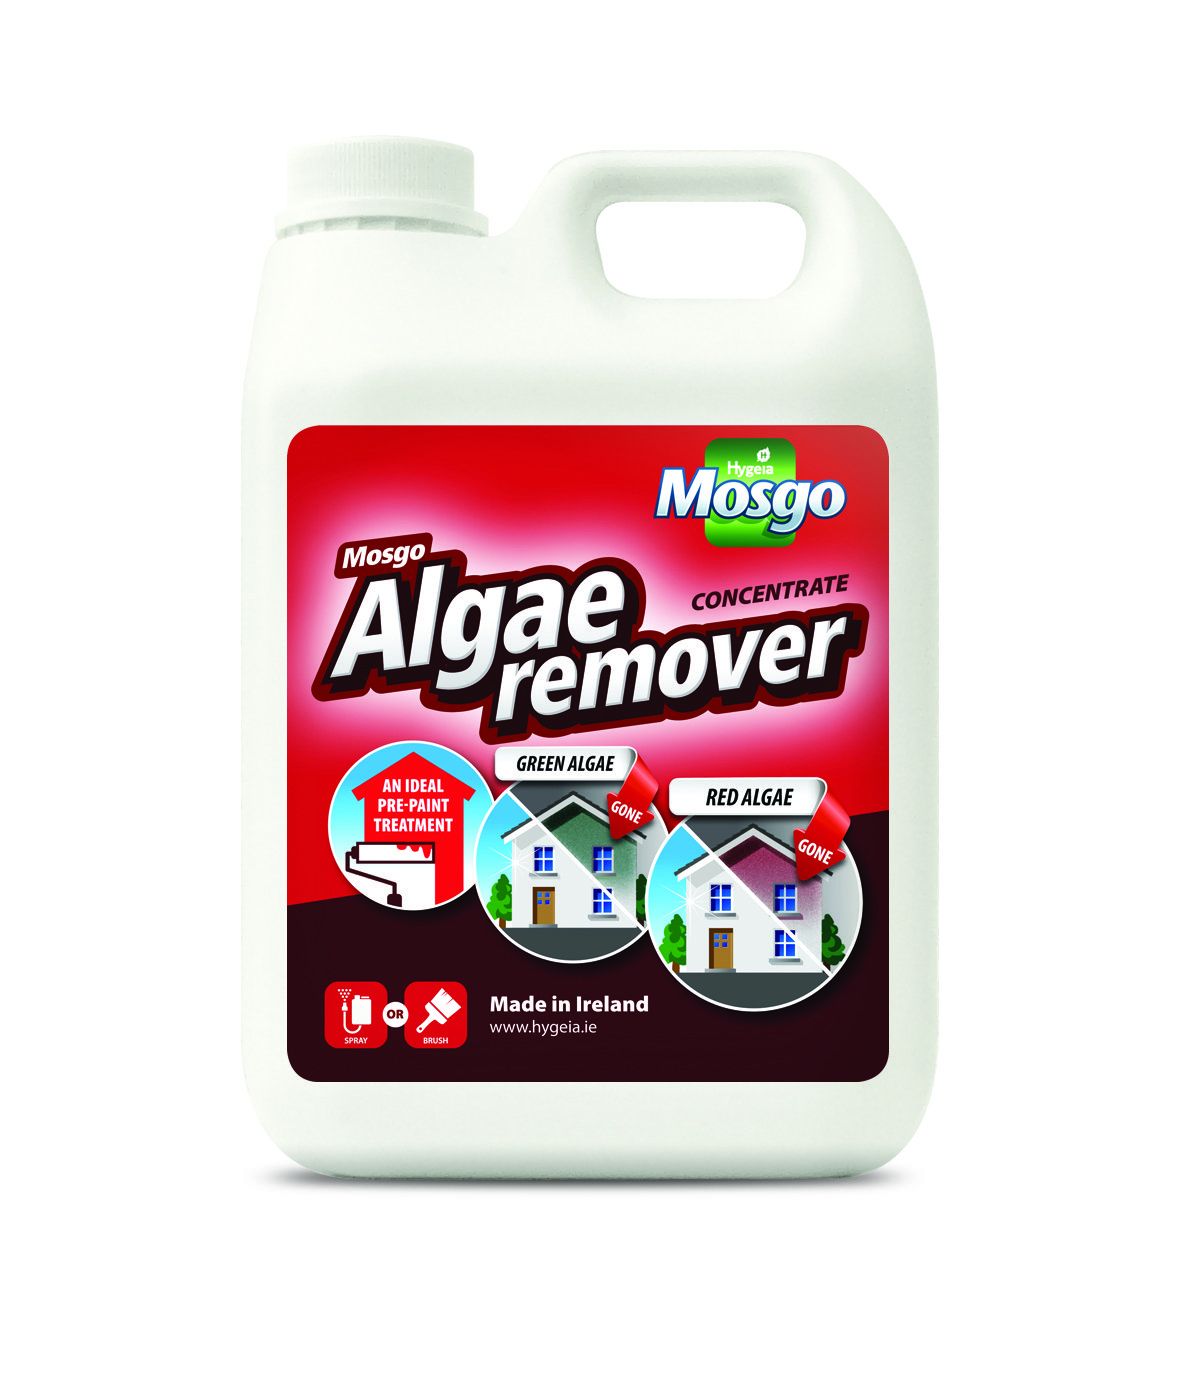 Algae-Free Solutions: Effectively Eradicating Moss and Algae with Mosgo Algae Remover